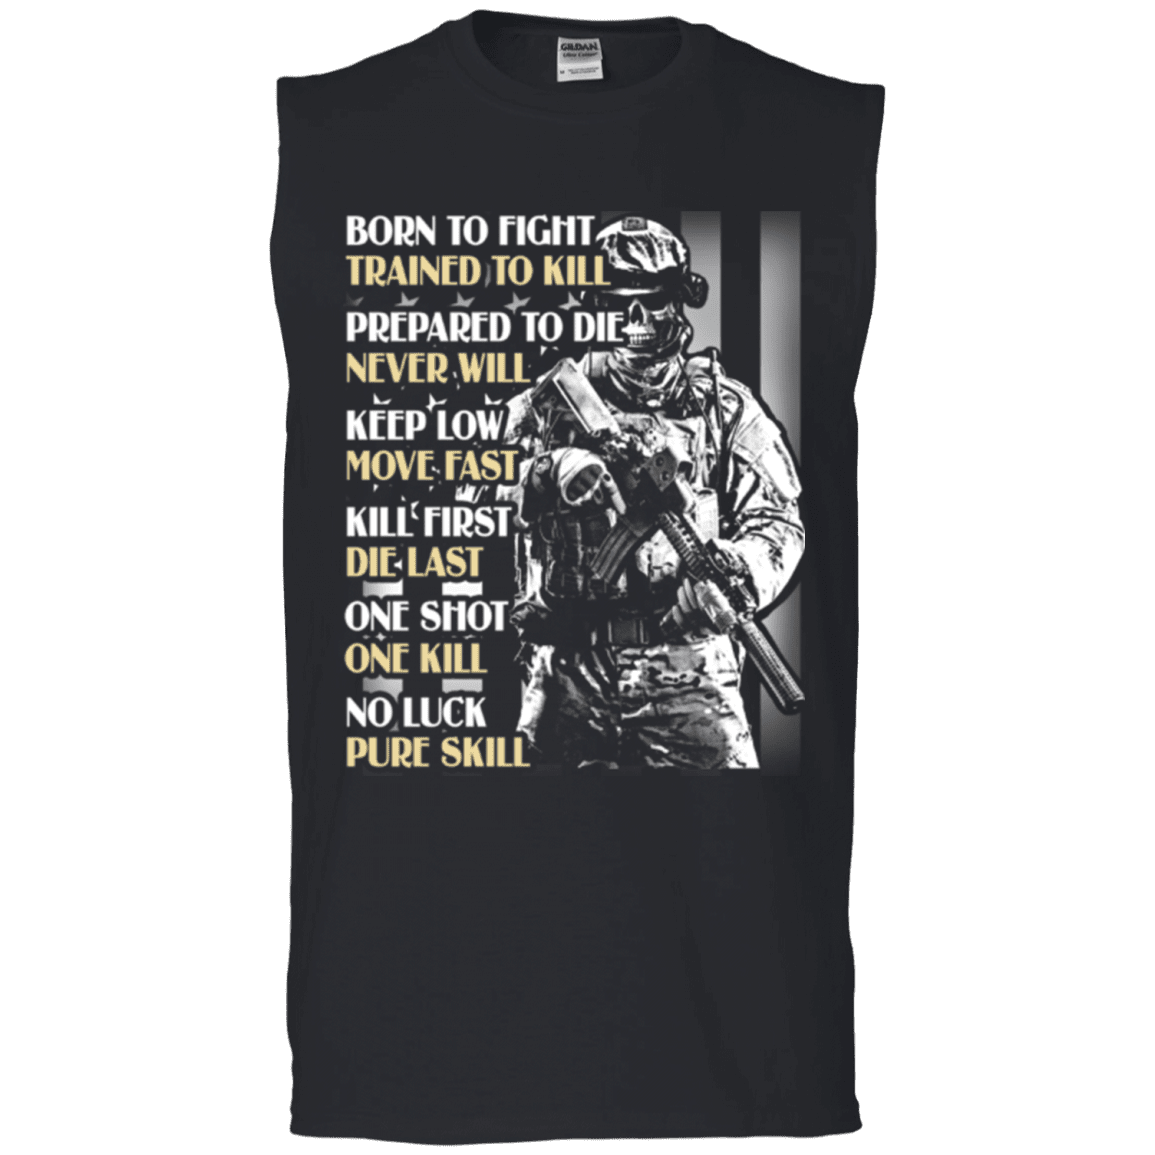 Military T-Shirt "Veteran Skill"-TShirt-General-Veterans Nation